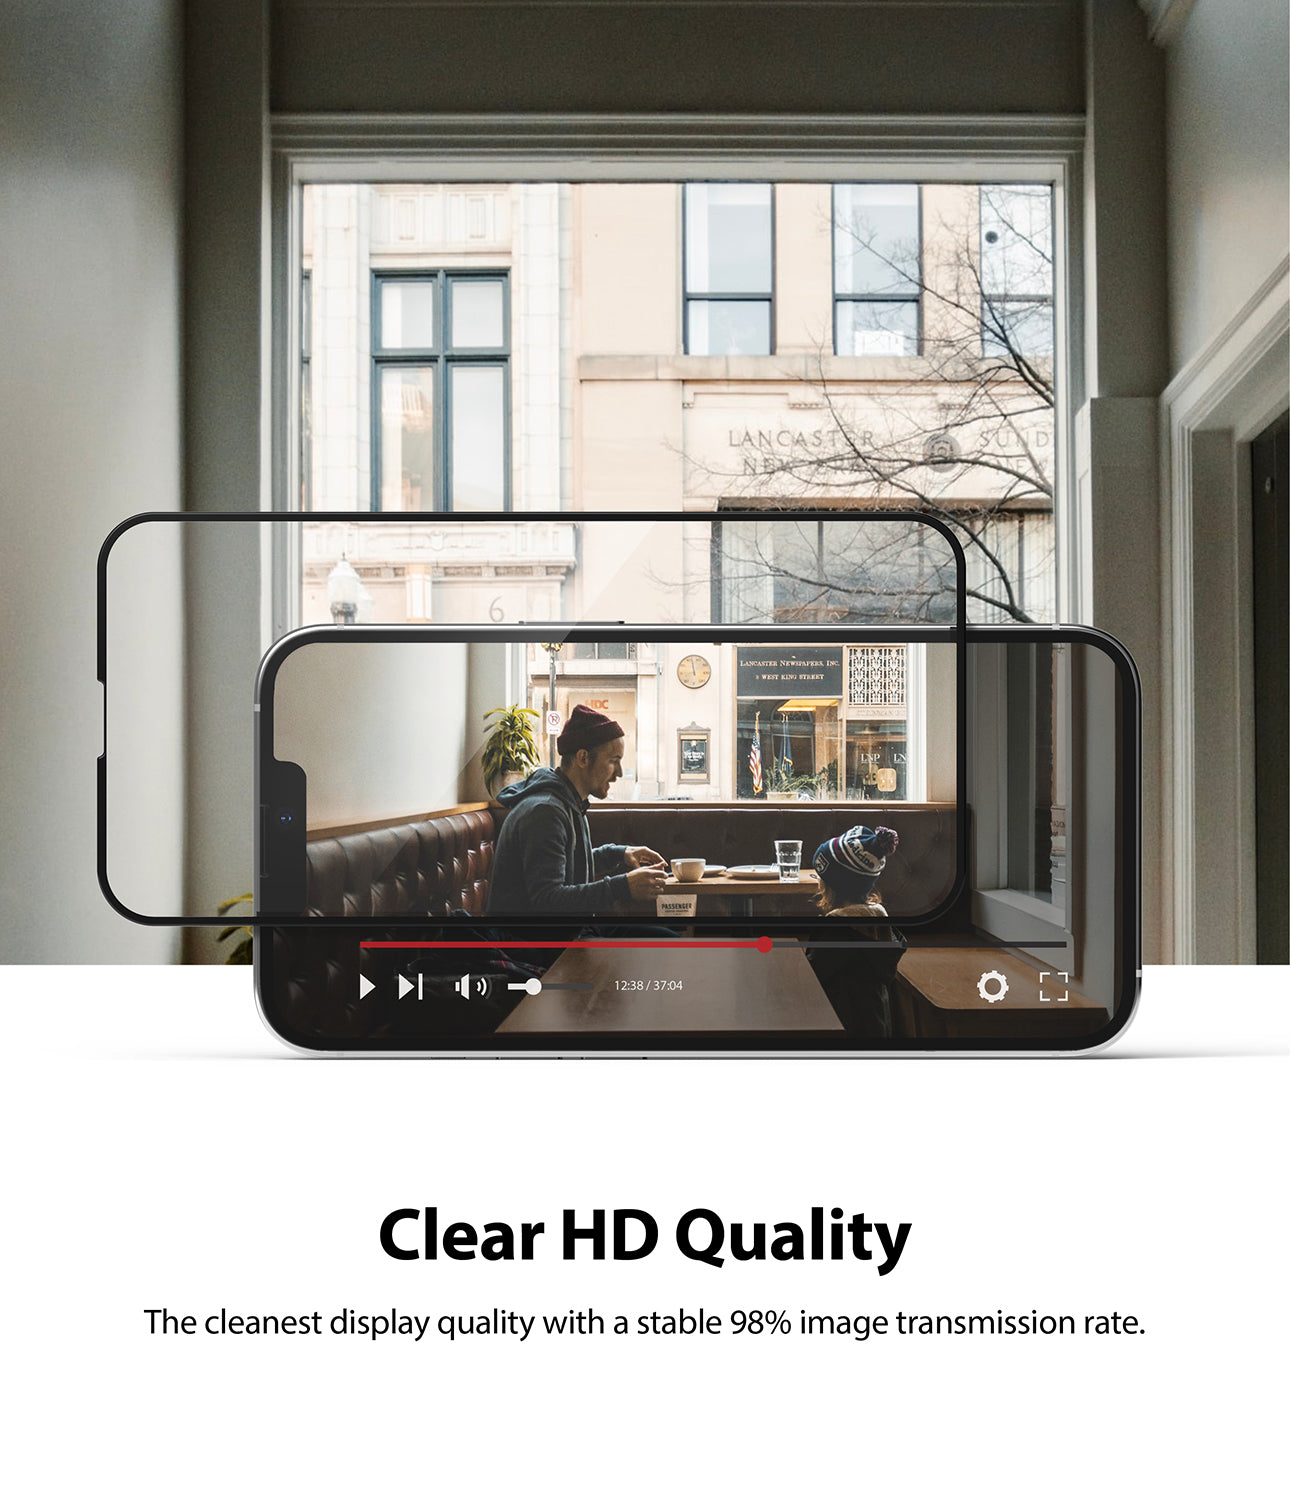 Clear HD quality